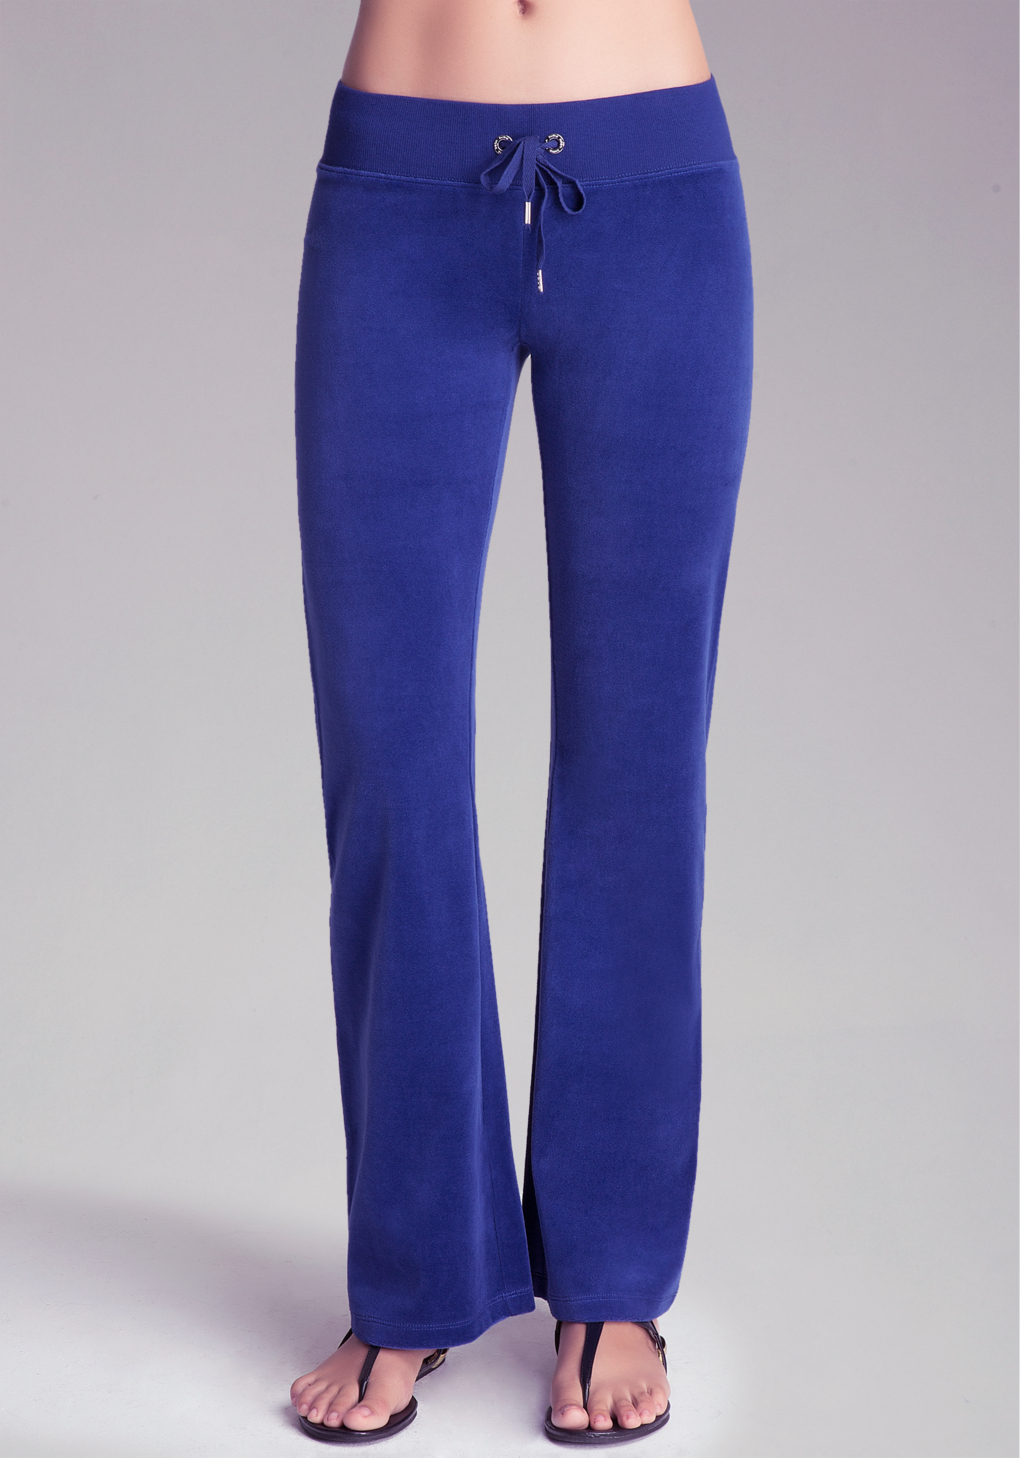 Lyst - Bebe Petite Solid Velour Pants in Blue